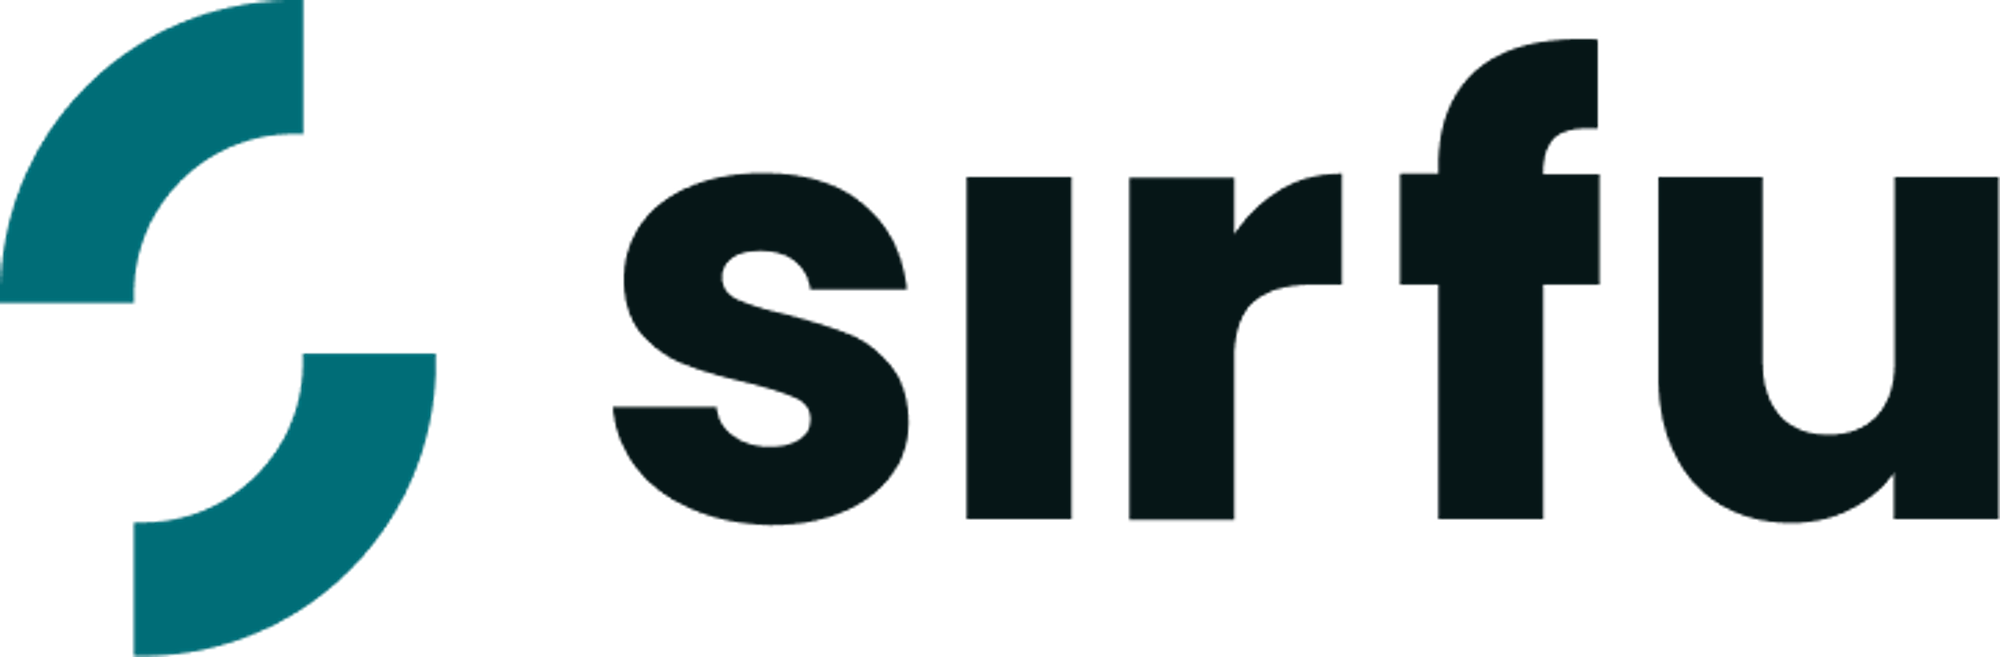 Modern logo design for sirfu.com